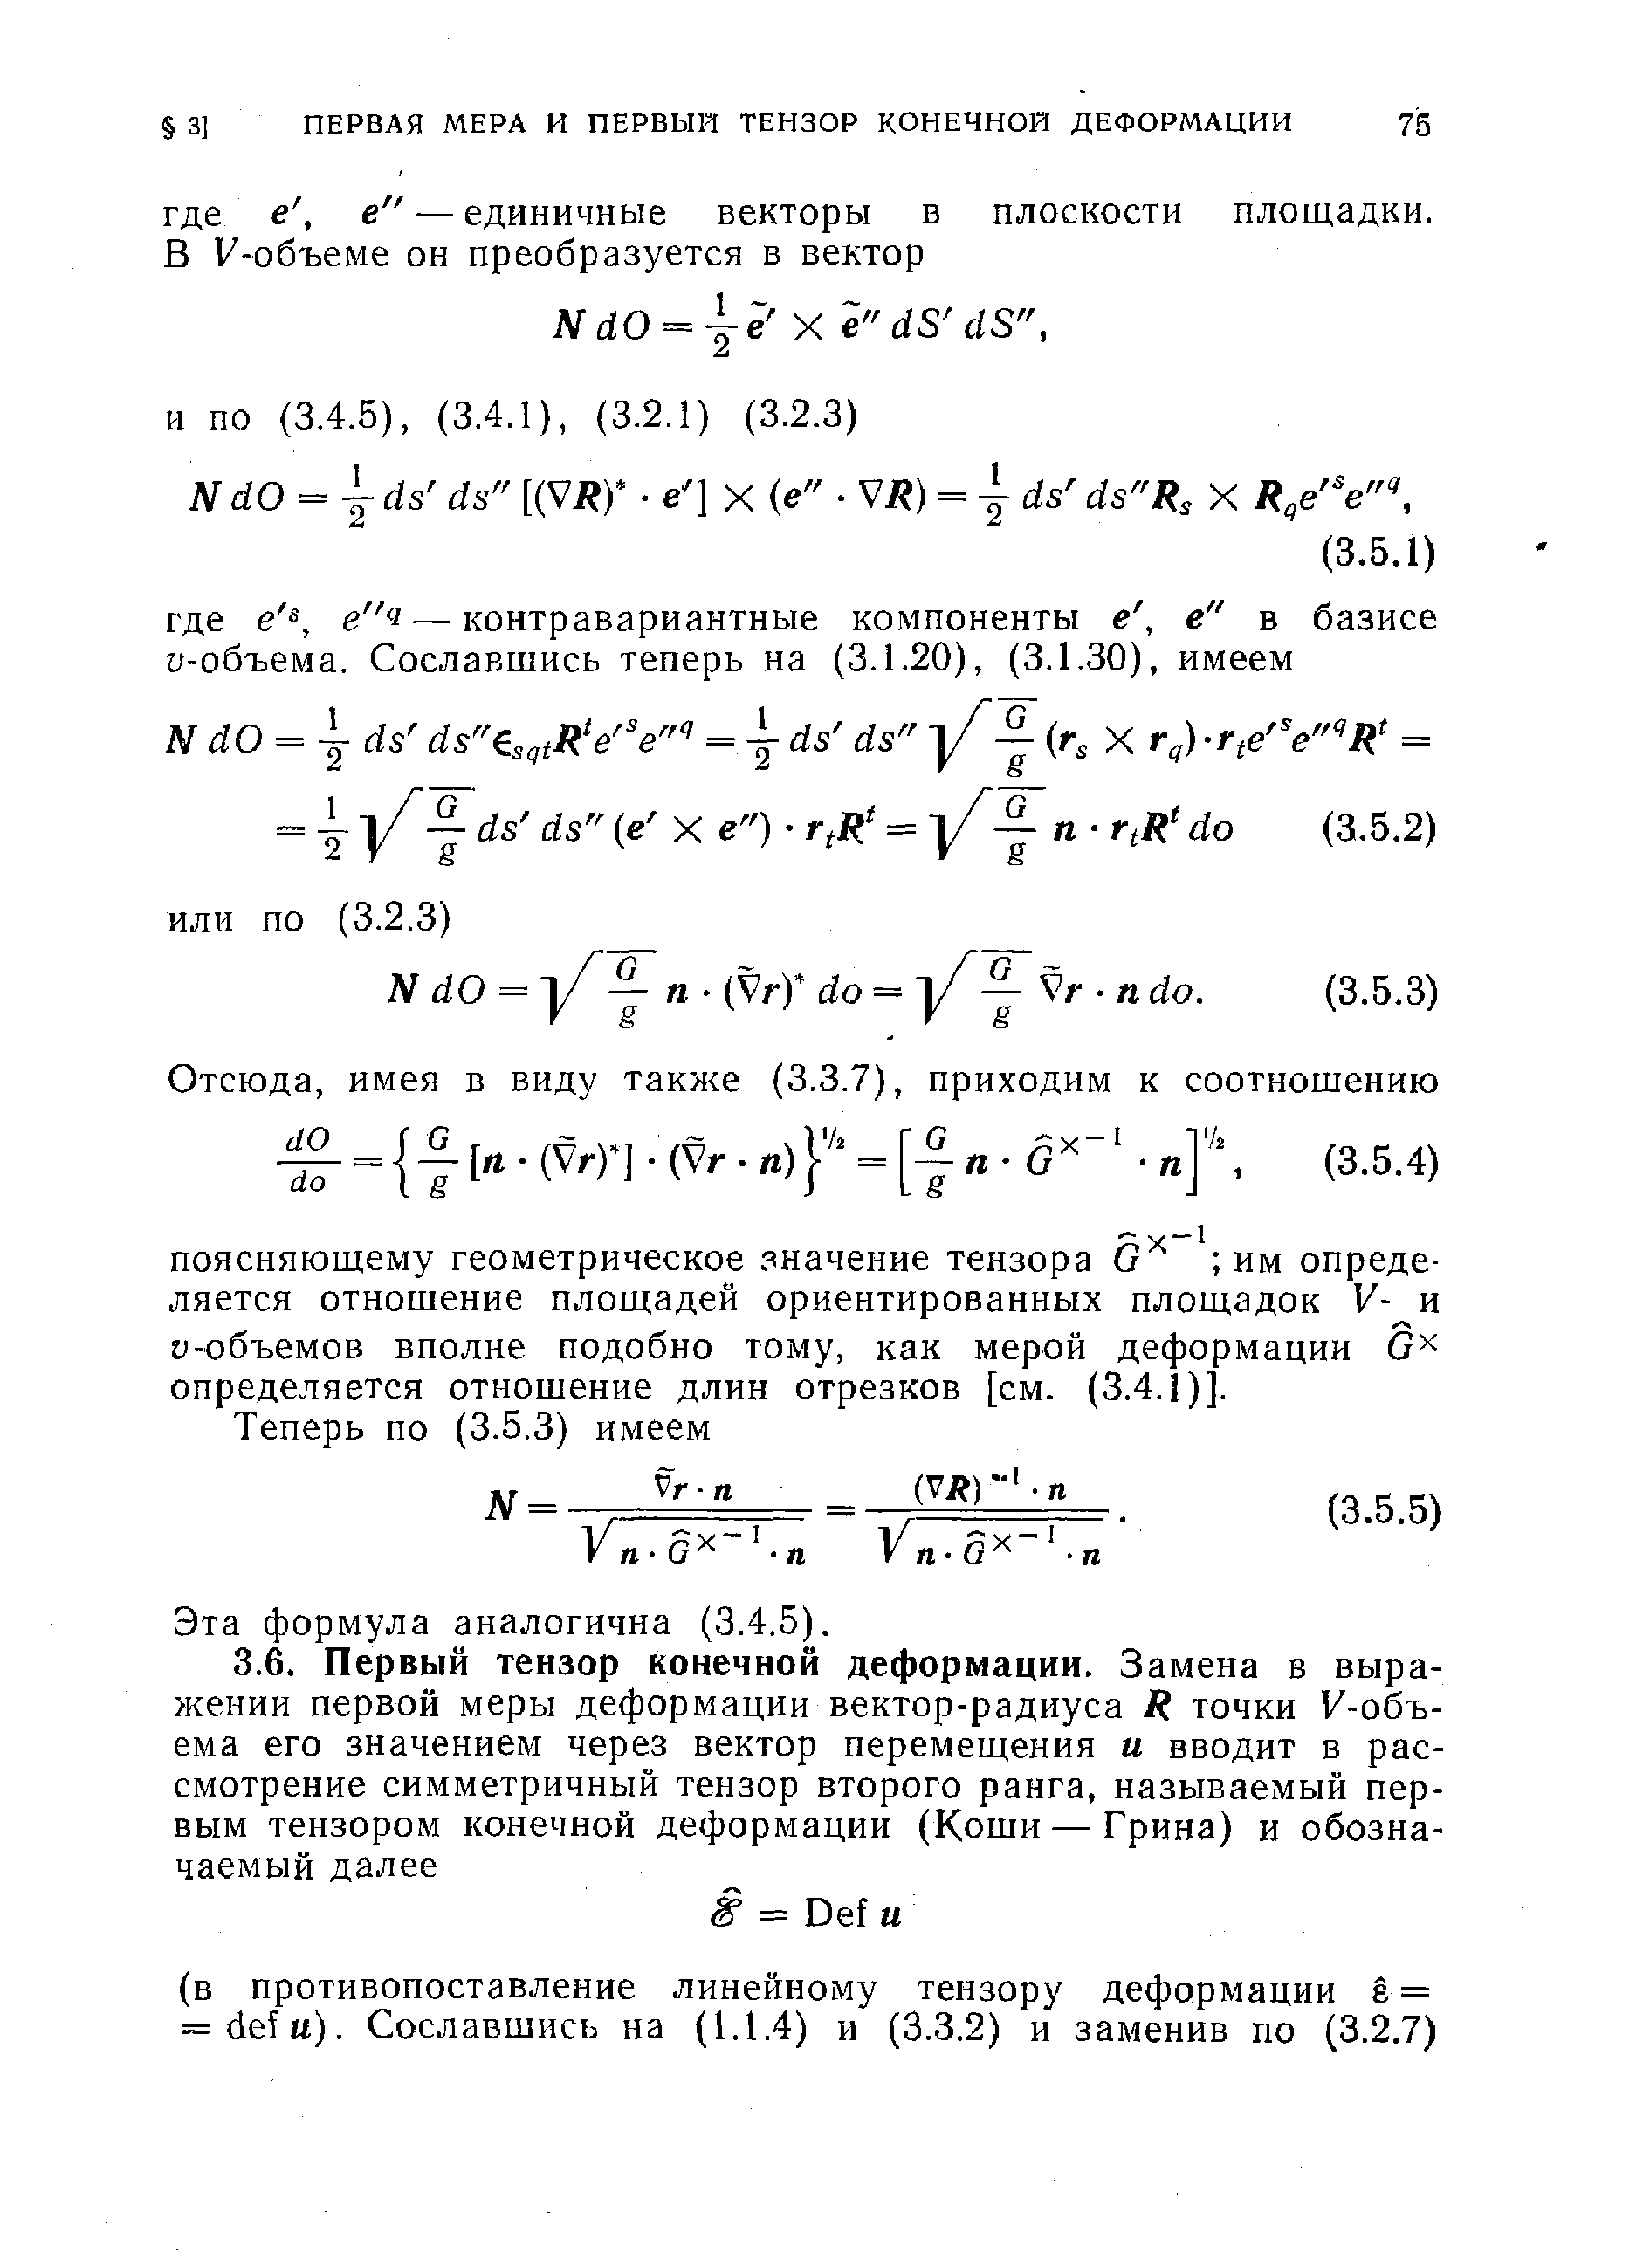 Эта формула аналогична (3.4.5).
